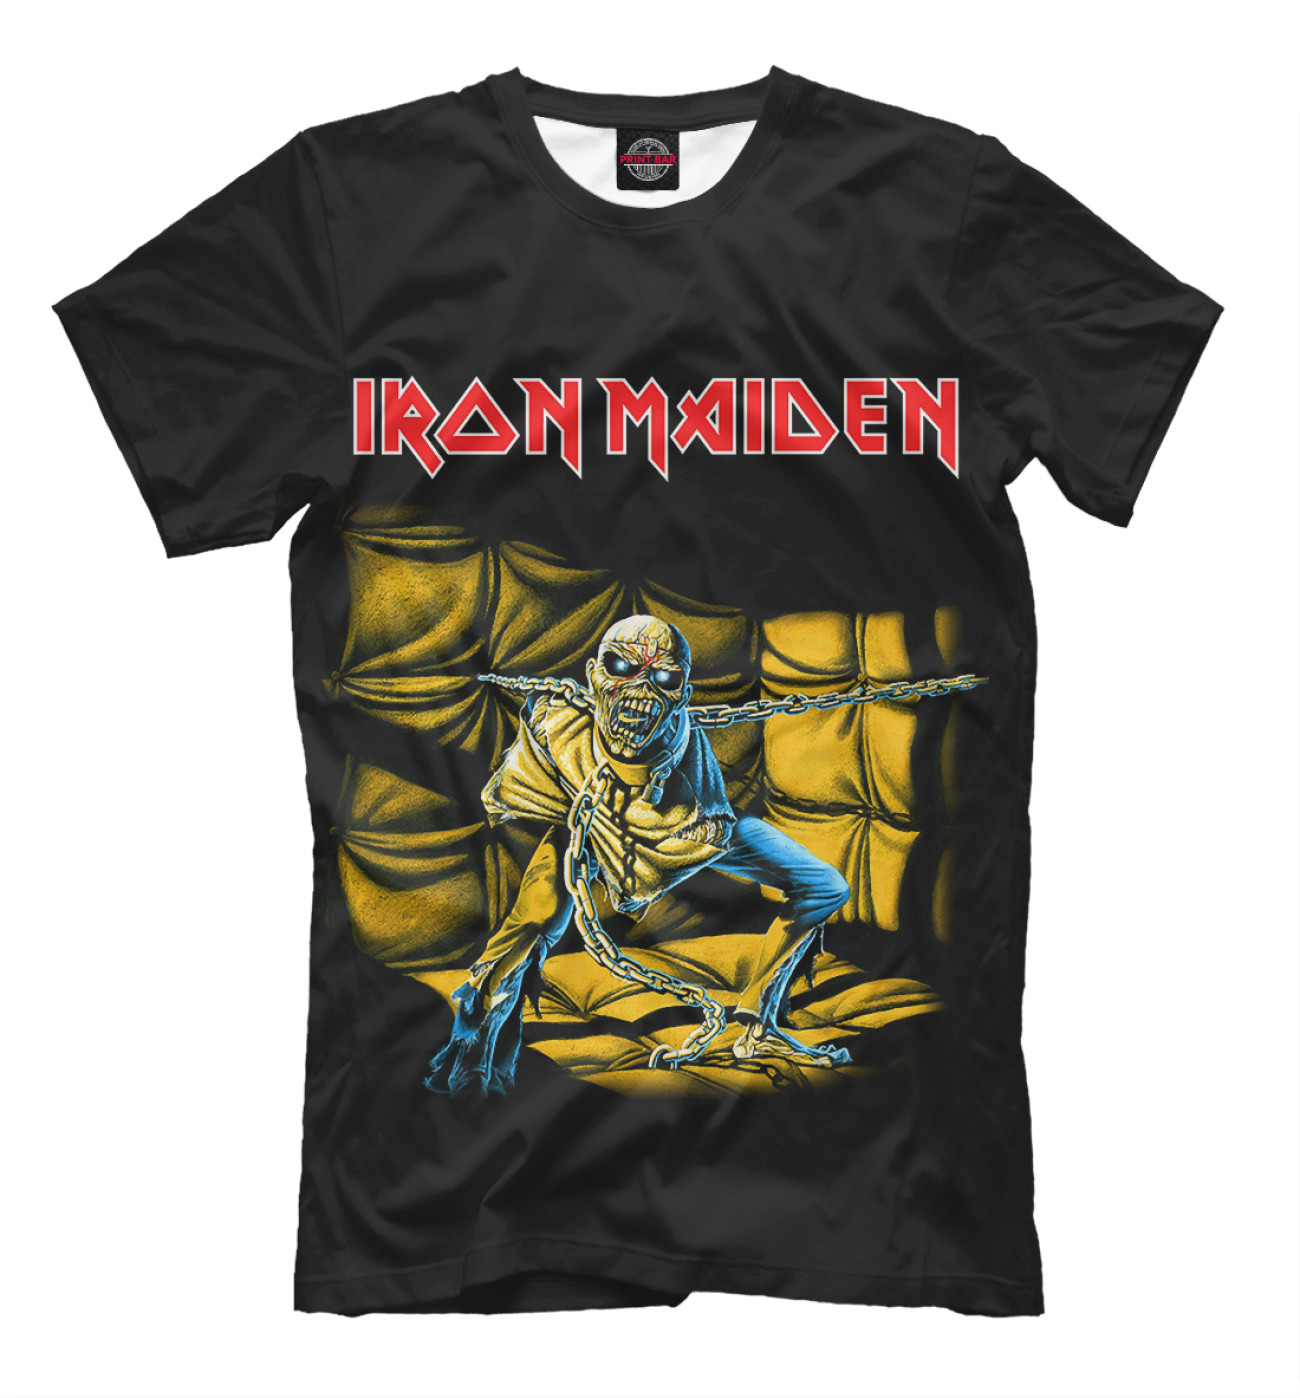 Мужская Футболка Iron Maiden Piece of Mind, артикул: IRN-321555-fut-2